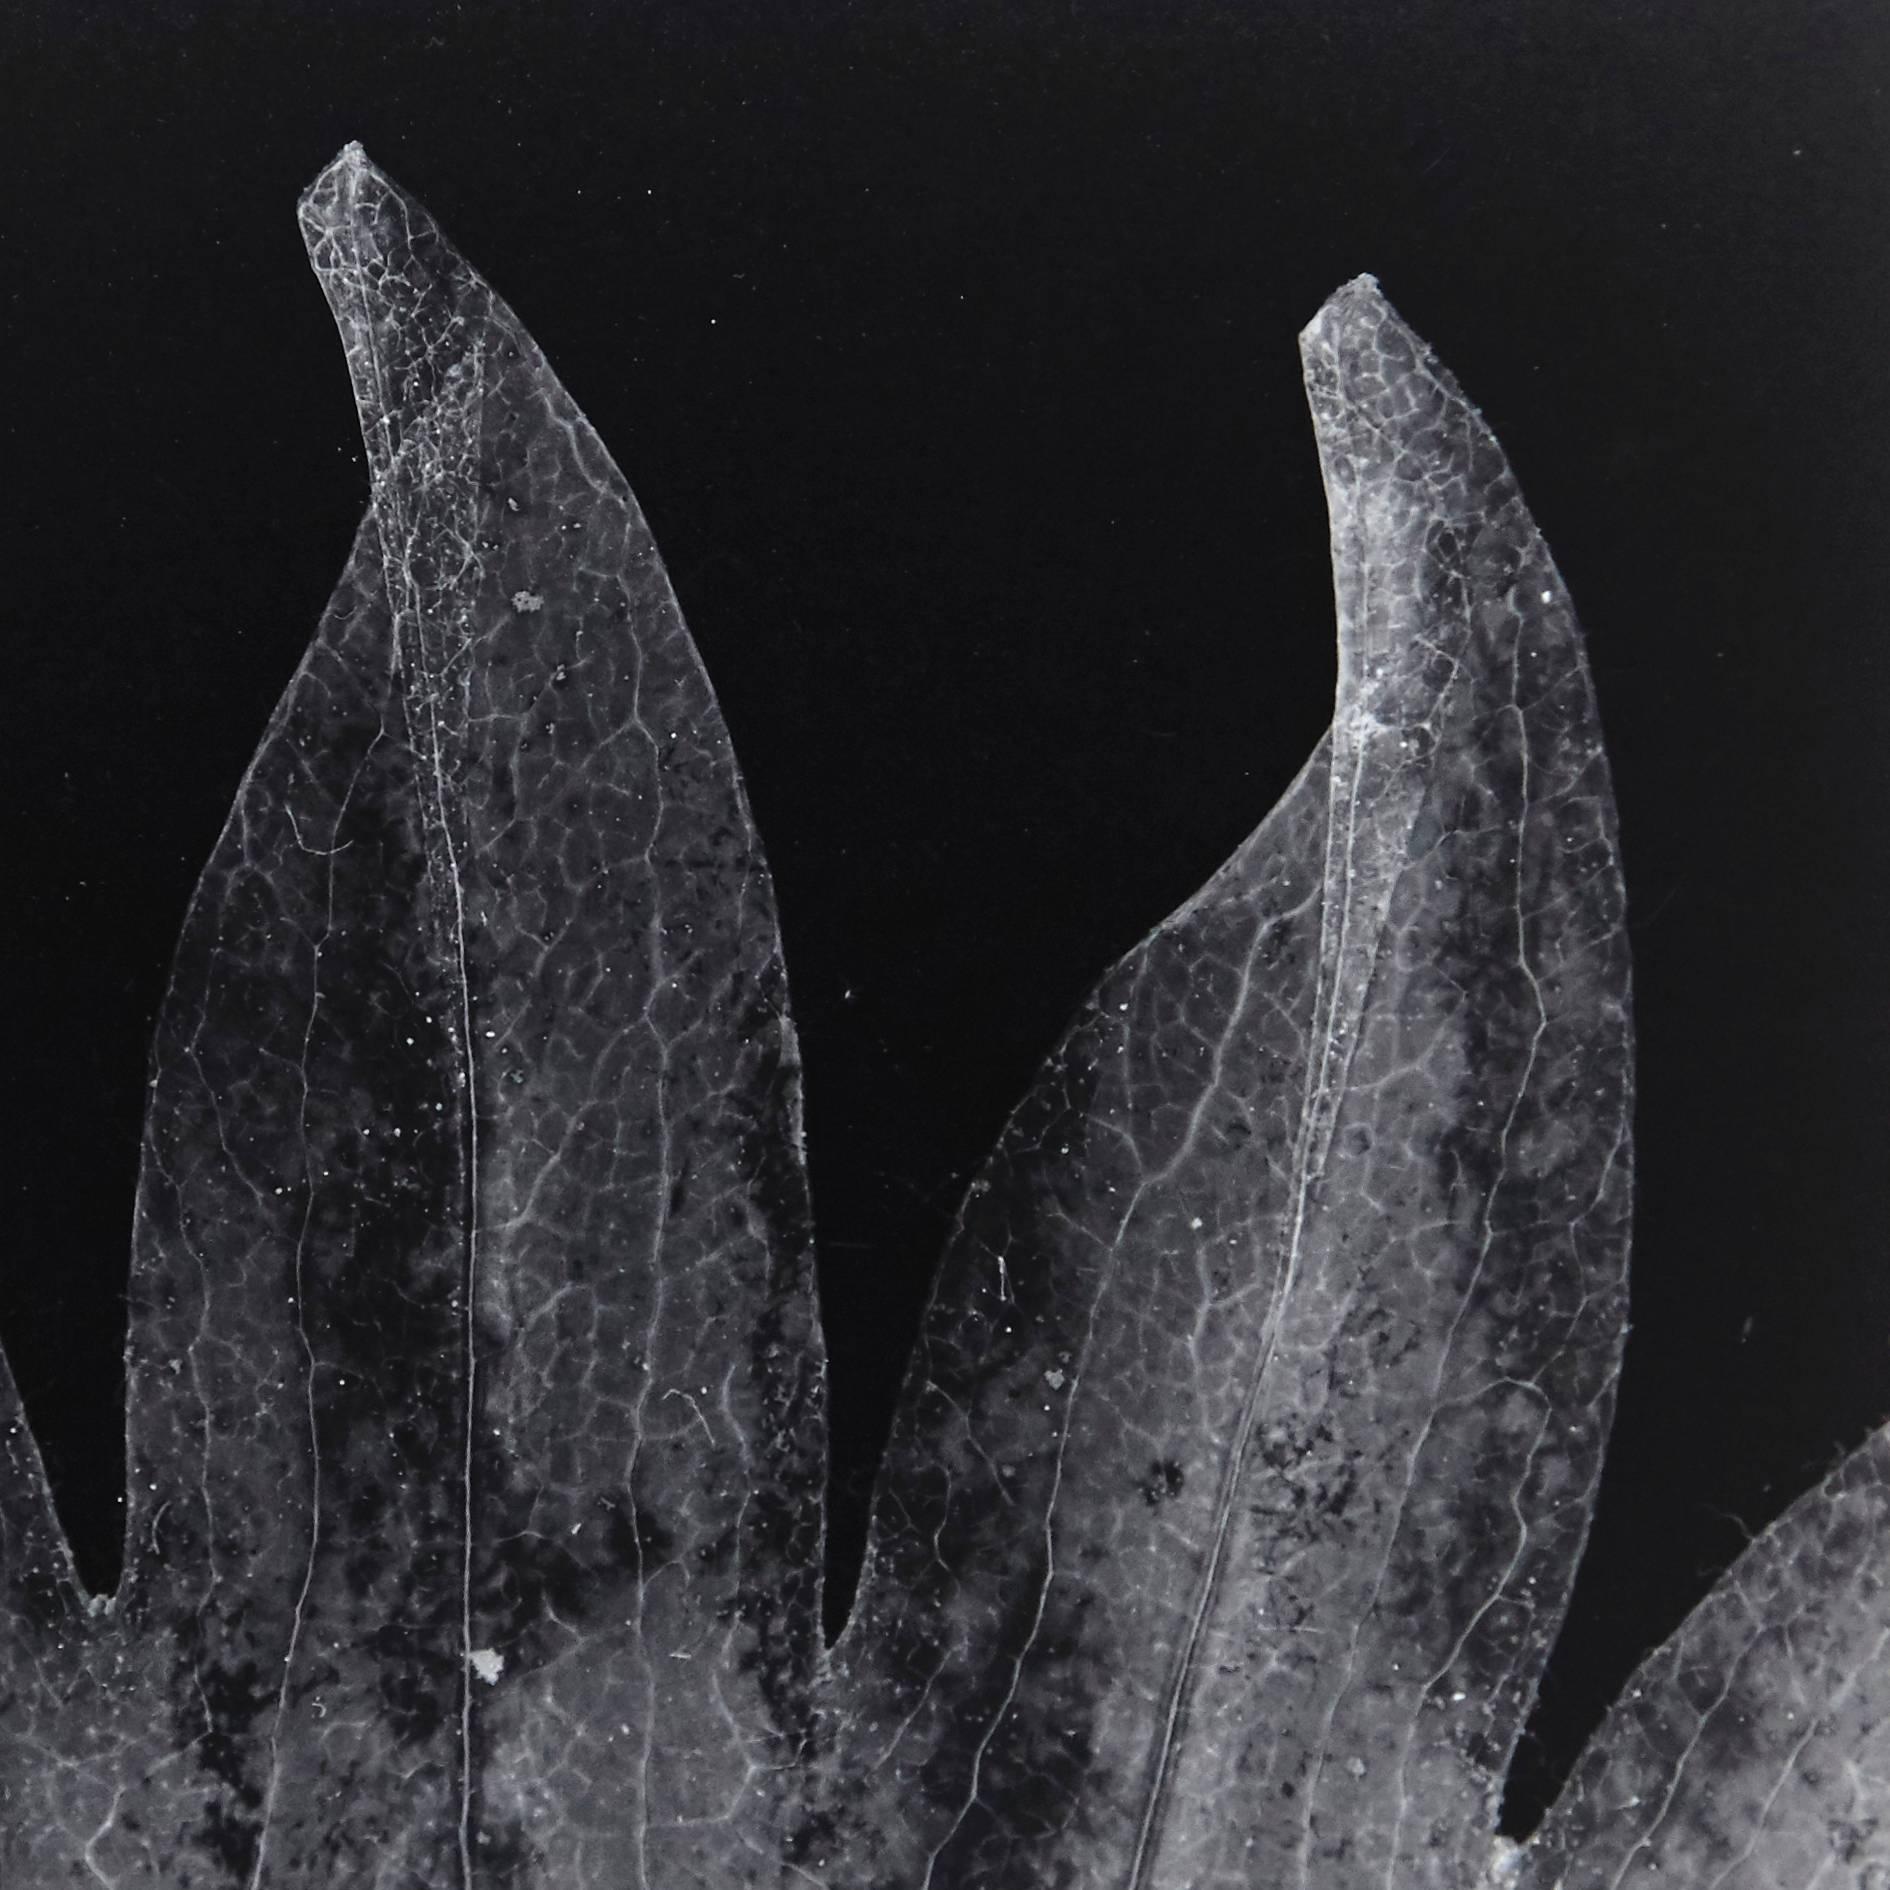 Photogram by Enrico Garzaro from the Flora serie, 2015.
Gelatin silver paper.